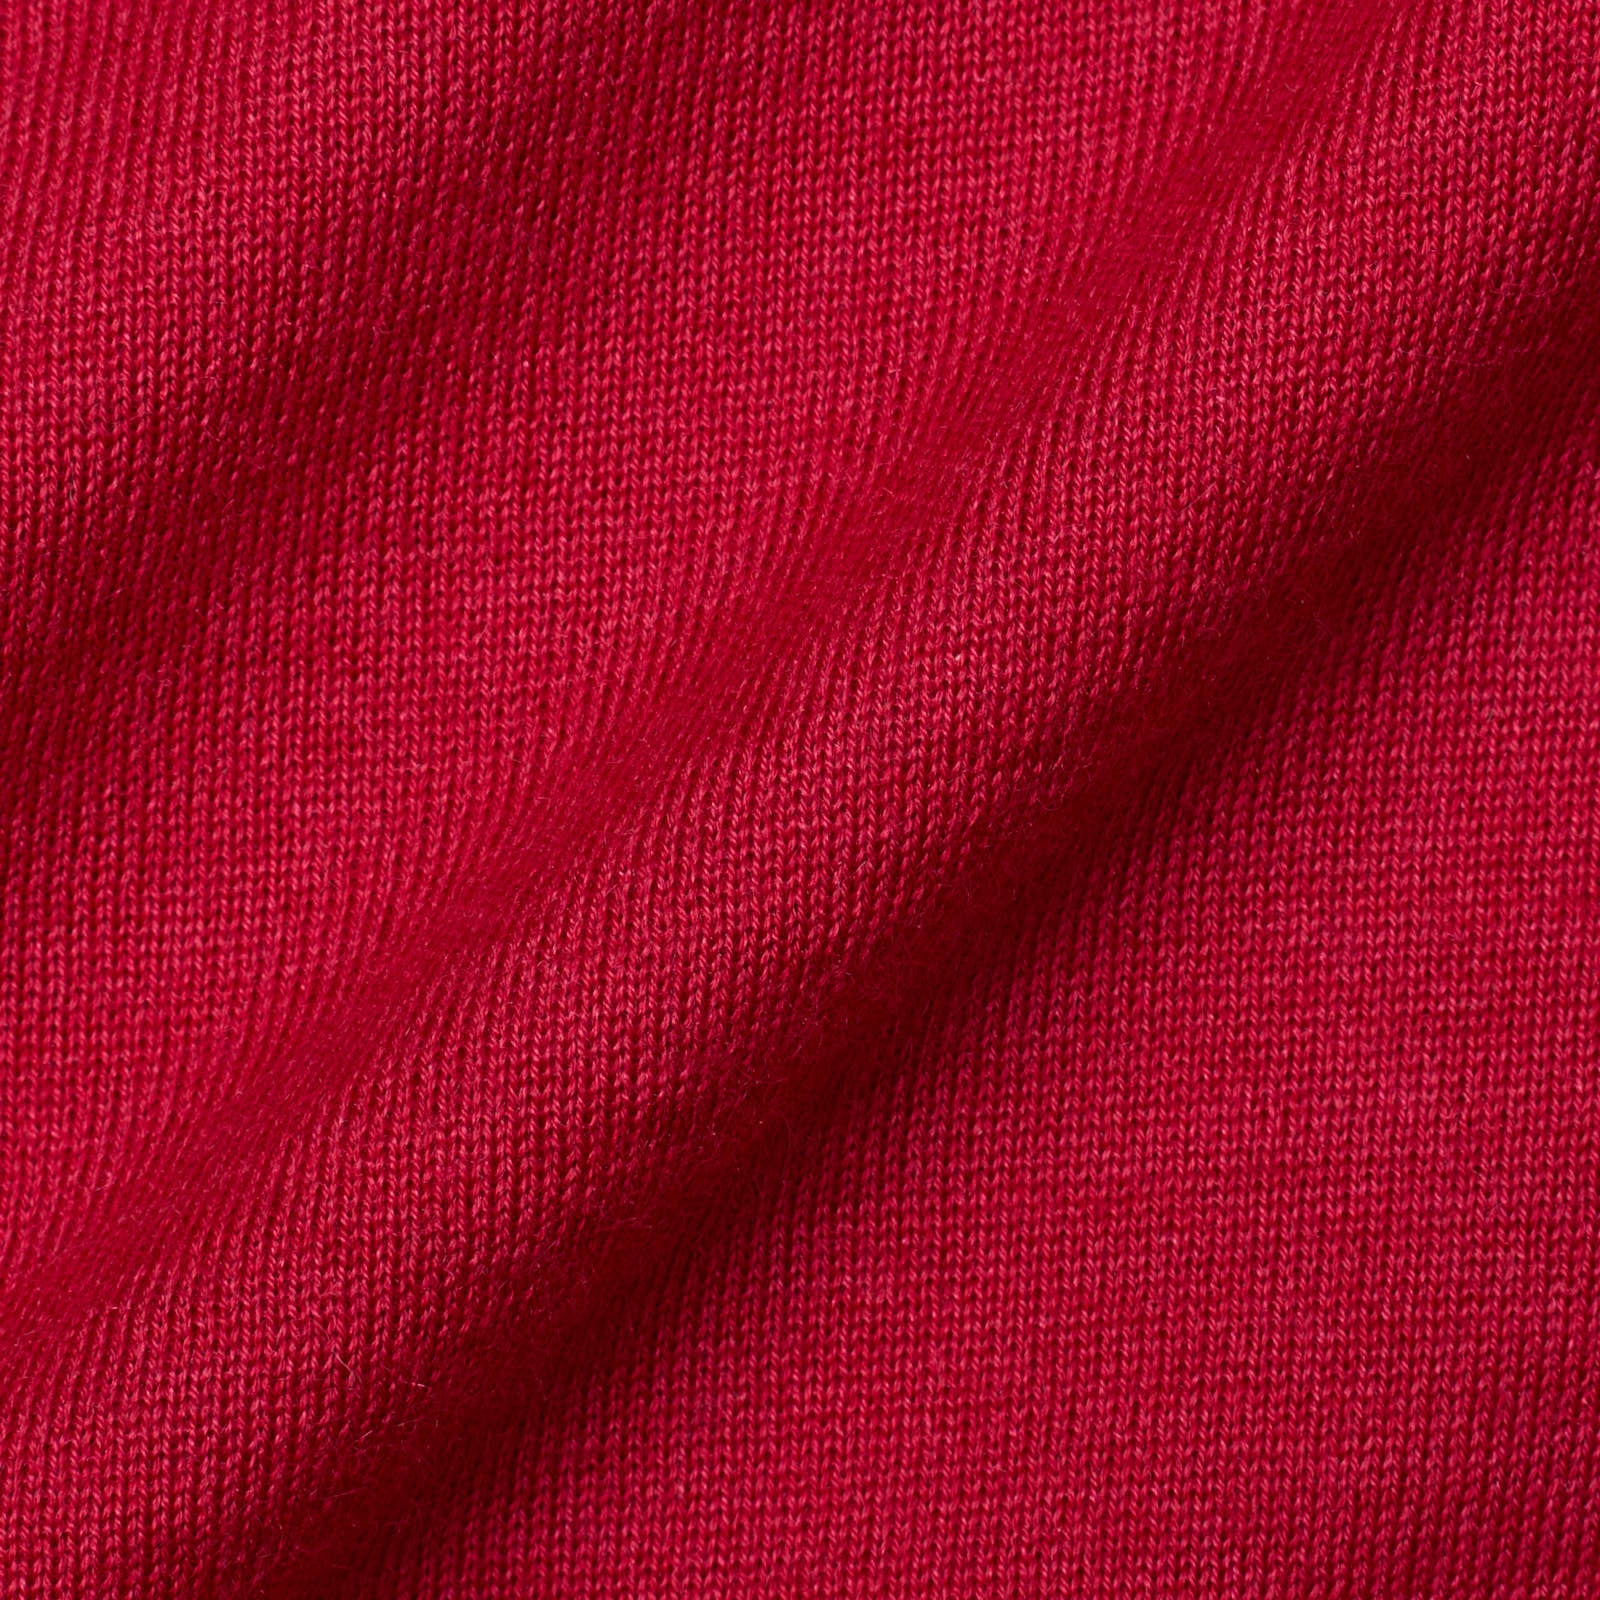 ONES Red-Beige Loro Piana Cashmere-Silk Knit 6 Button Sweater Vest EU 50 NEW US M